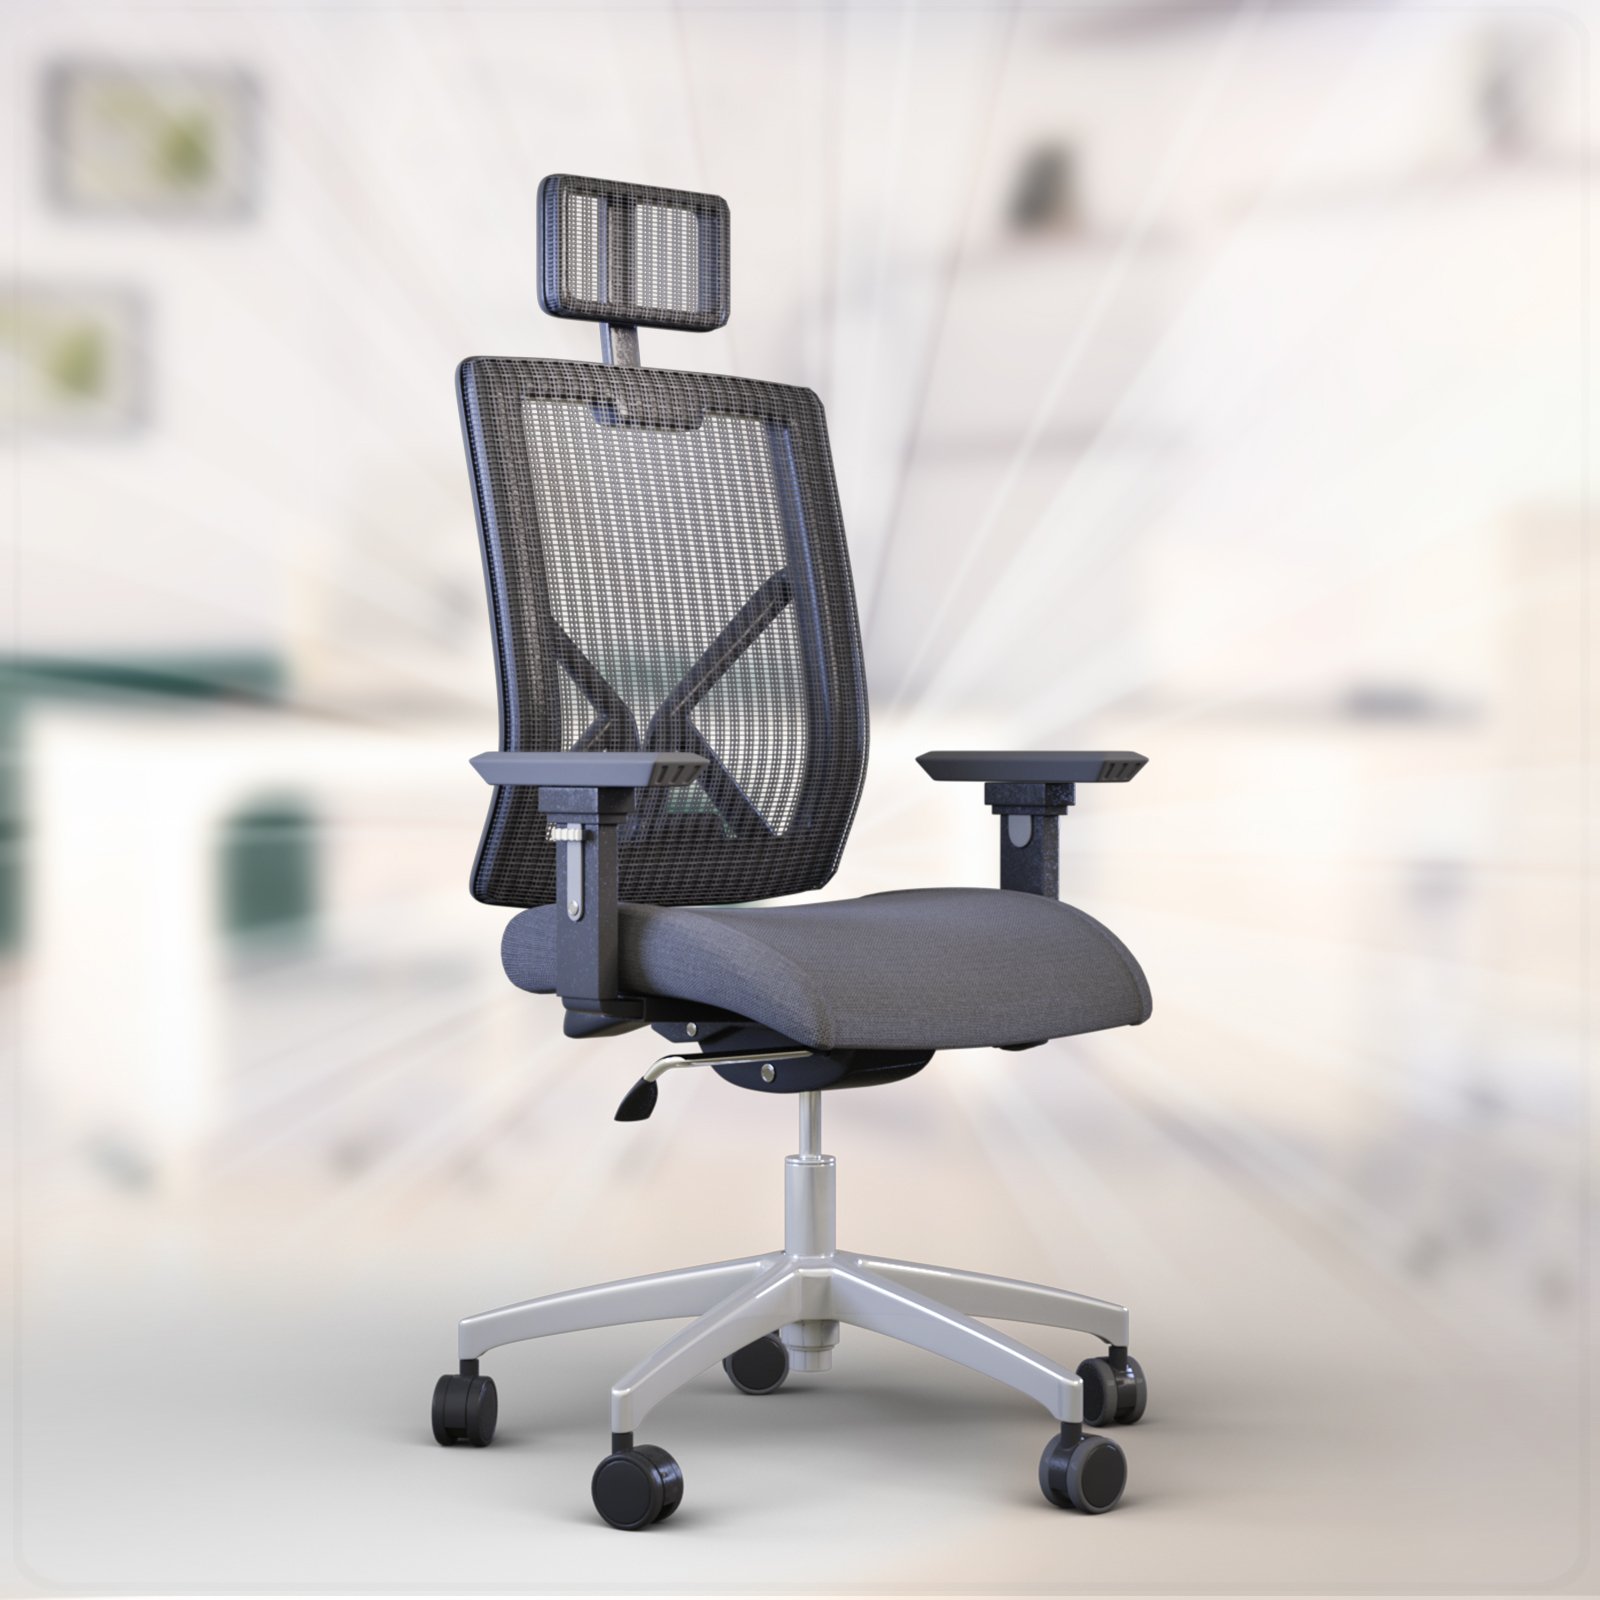 Z Morphing Office Chair & Poses by: Zeddicuss, 3D Models by Daz 3D